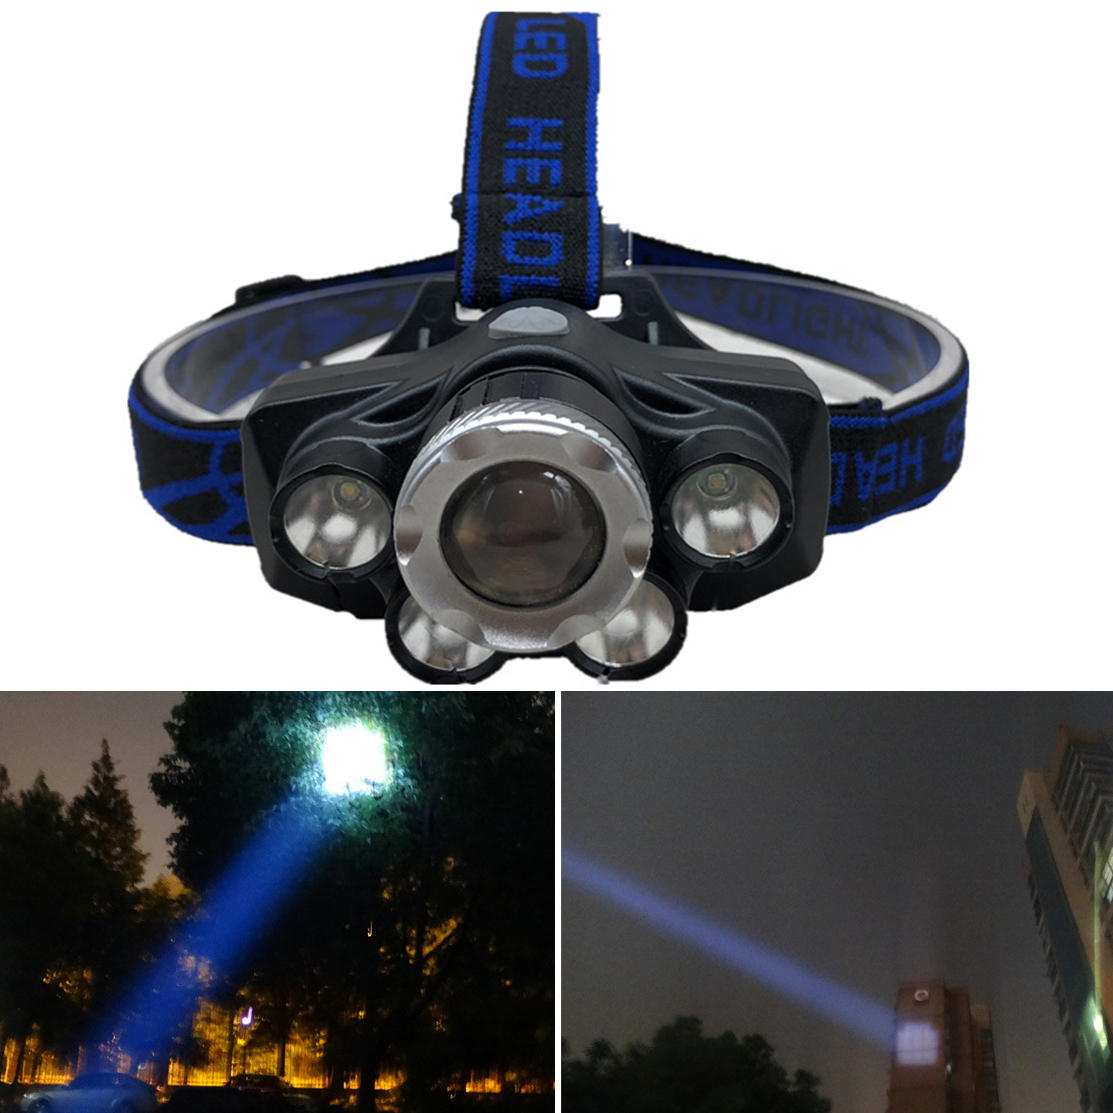 

XANES® GD-11 2700LM 5XT6 White Blue Headlamp Camping Cycling Hunting Emergency Lantern Zoomable Flashlight 18650 USB Rec